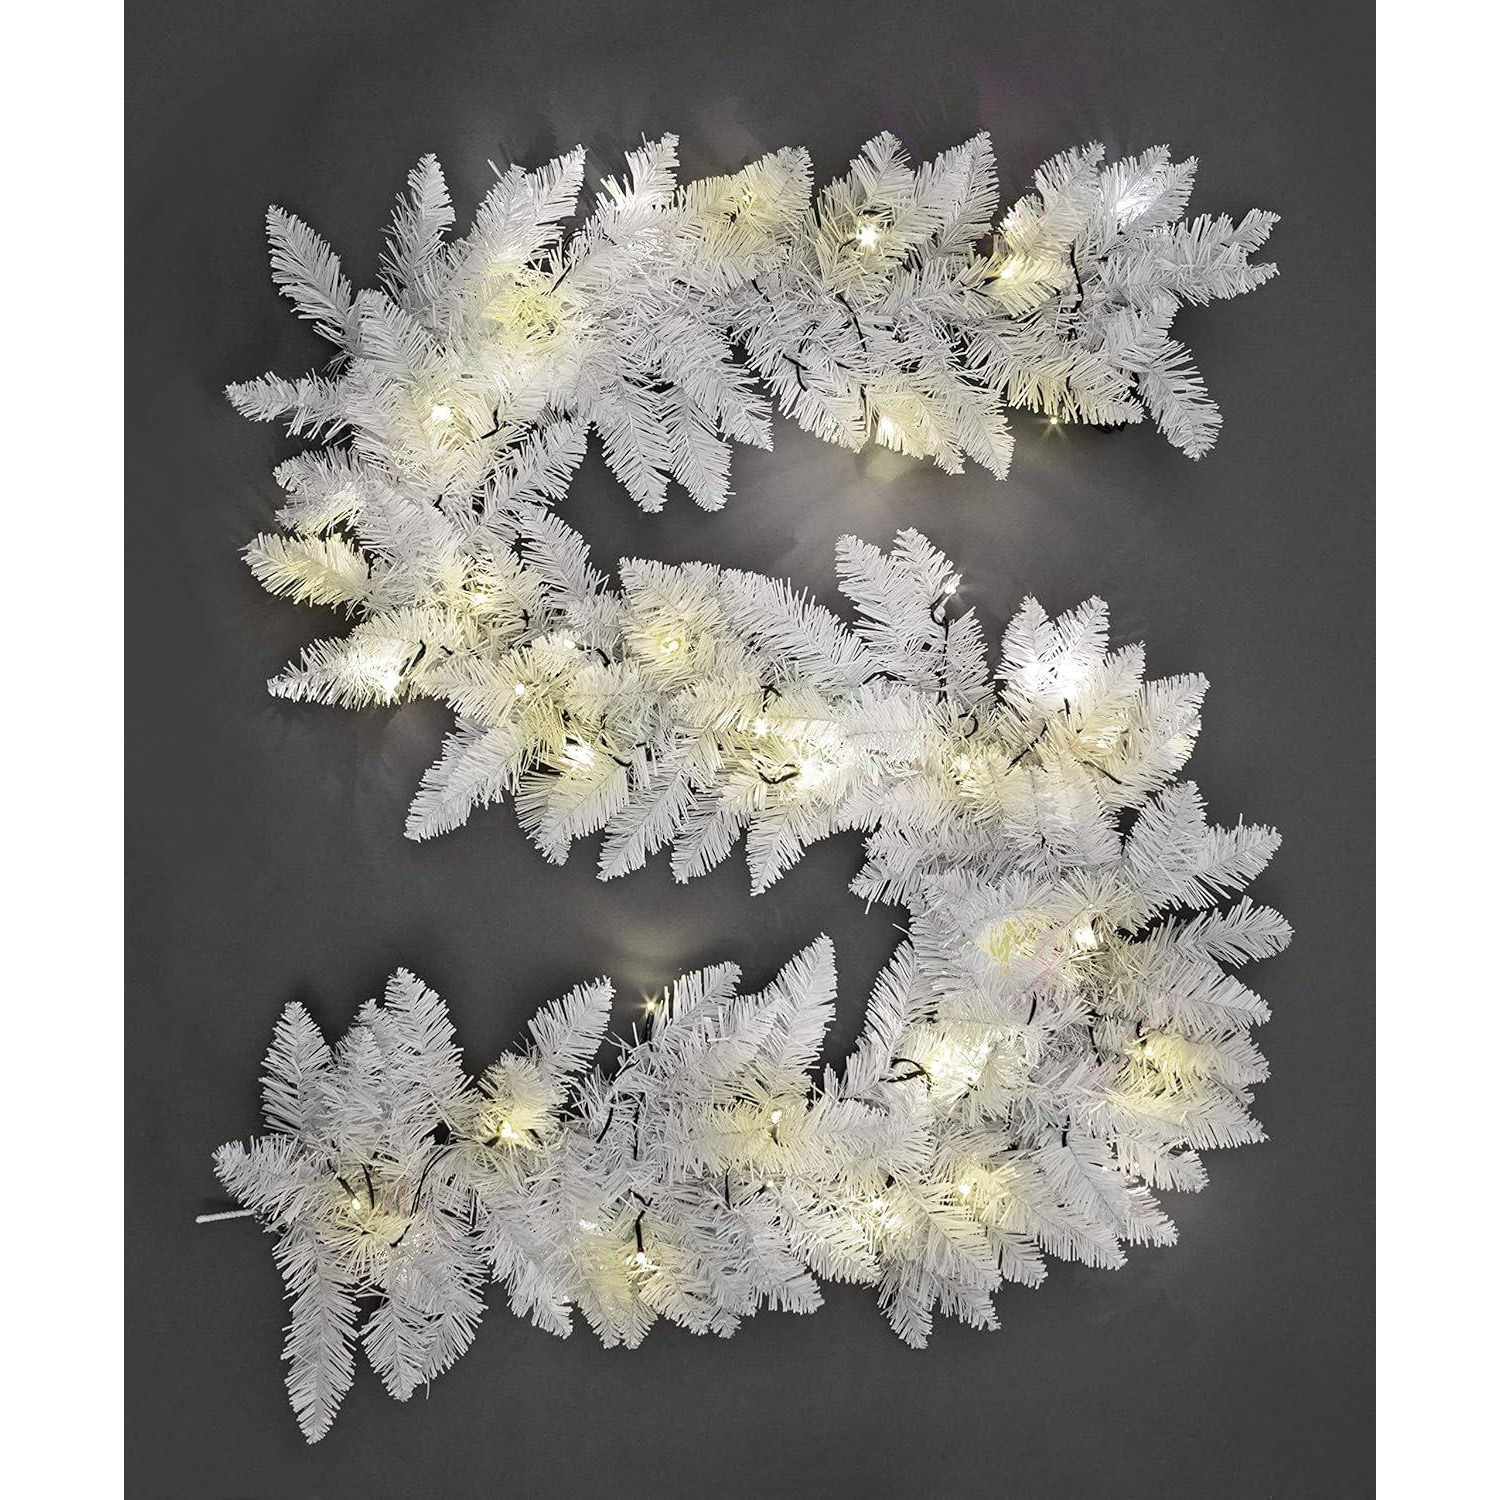 55cm Prelit Imperial Pine White W/Warm White Leds Christmas Christmas Garland - image 1